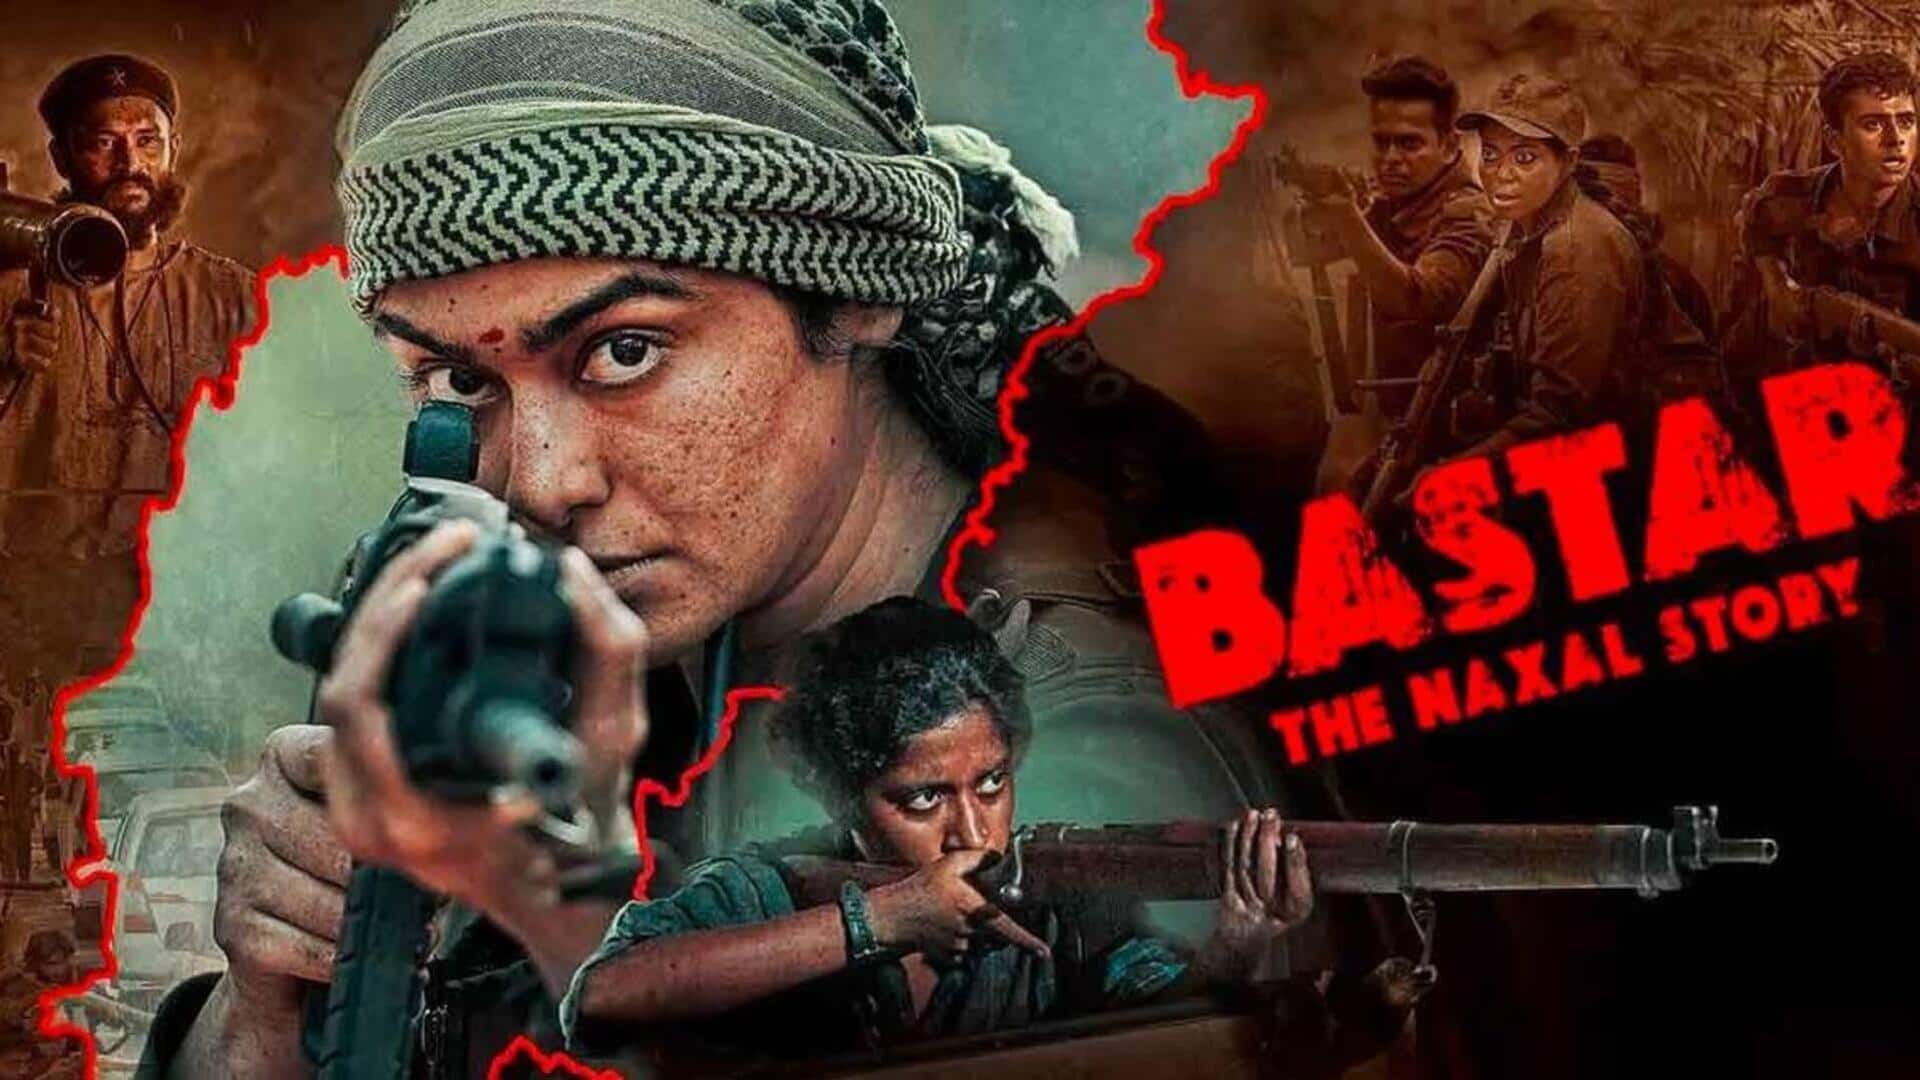 Box office: 'Bastar' shows slight improvement; struggles to gain momentum